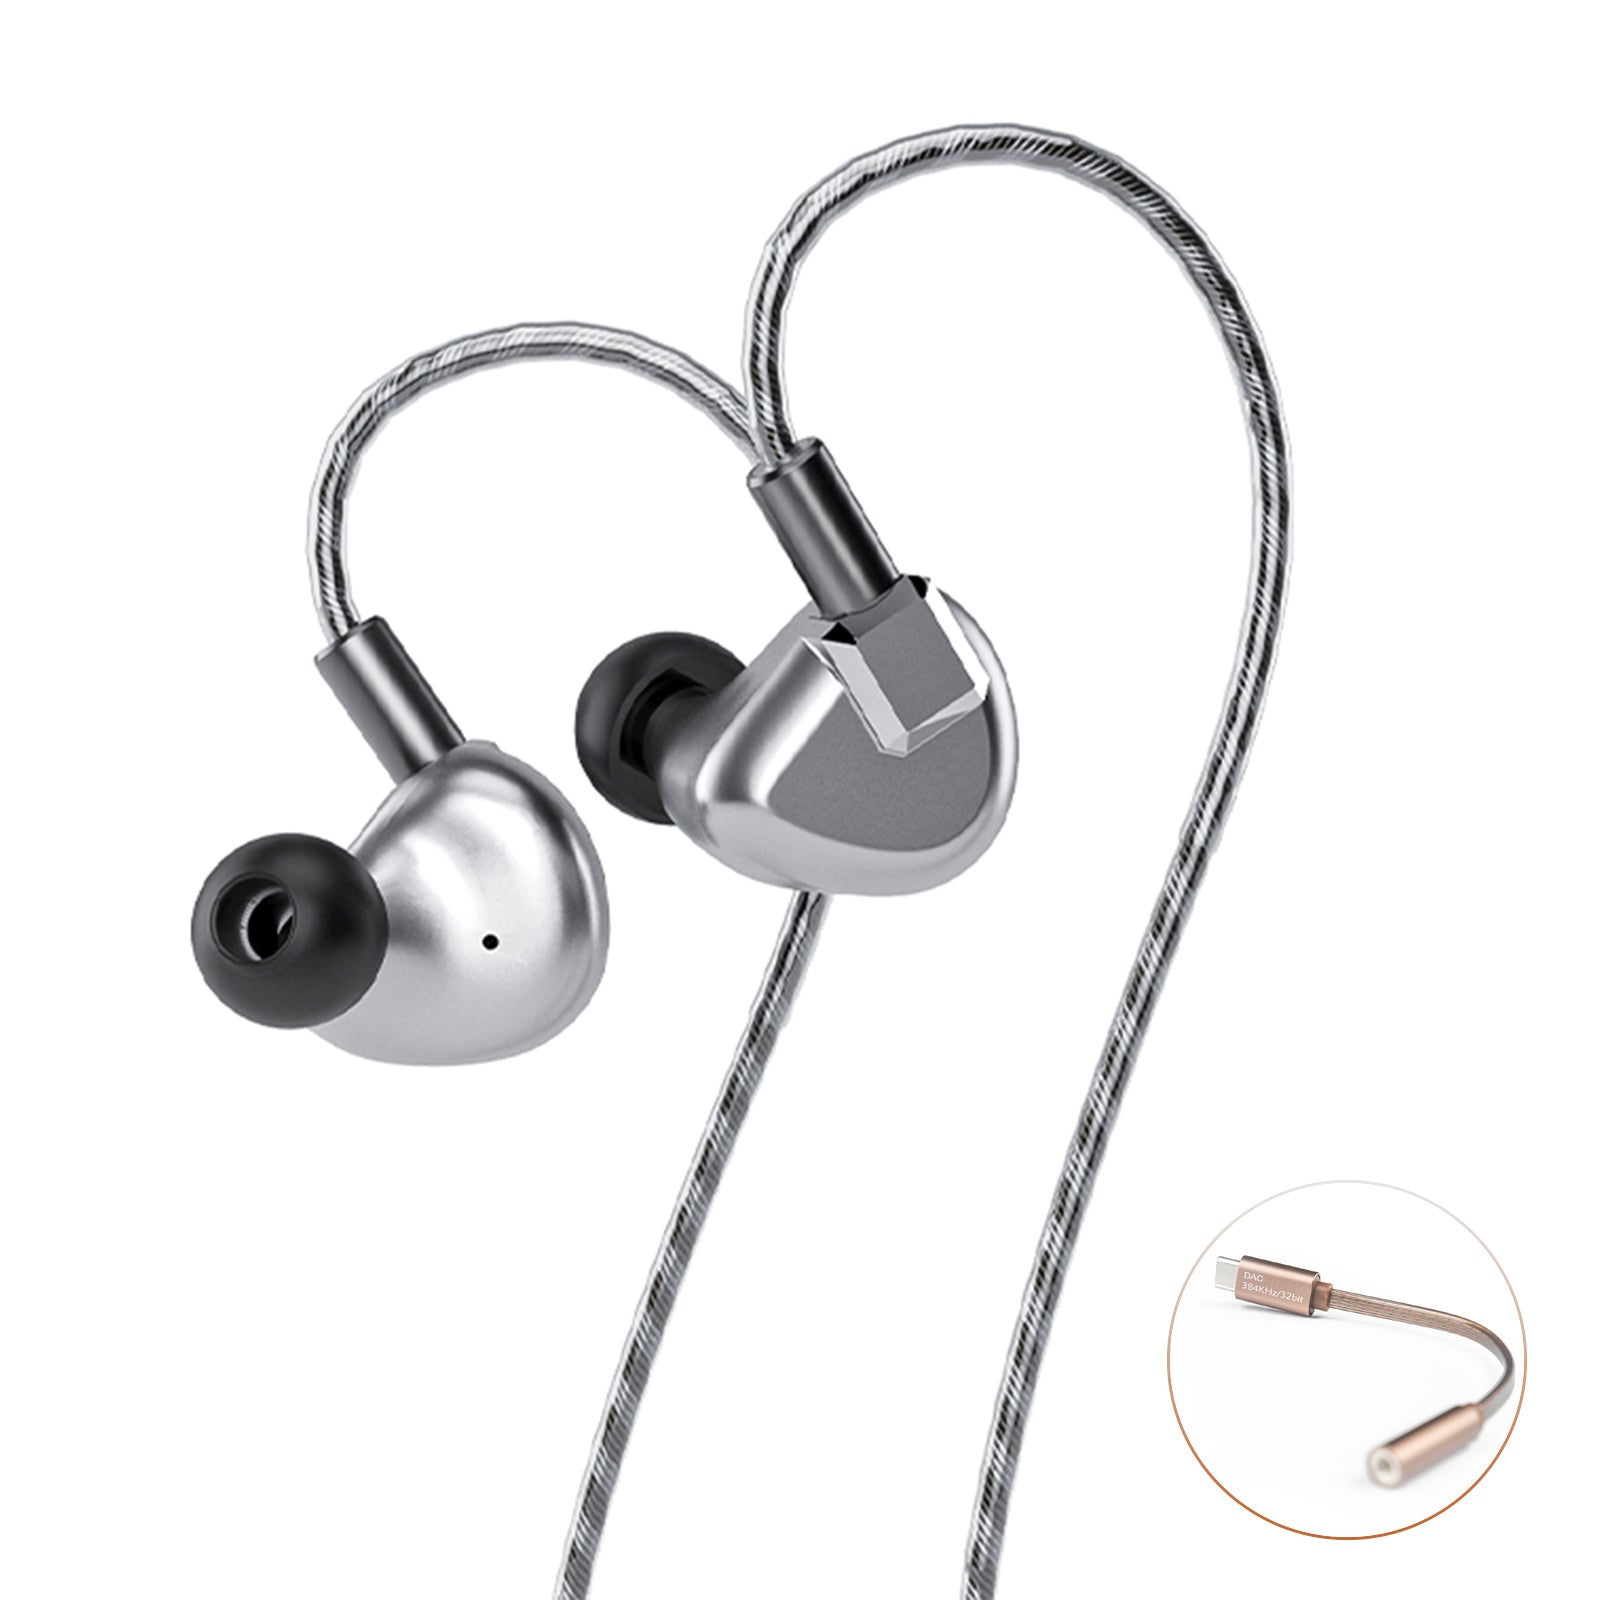 LETSHUOER S12 -  14.8mm planar IEMs and best Hi-Fi earphones for music lovers